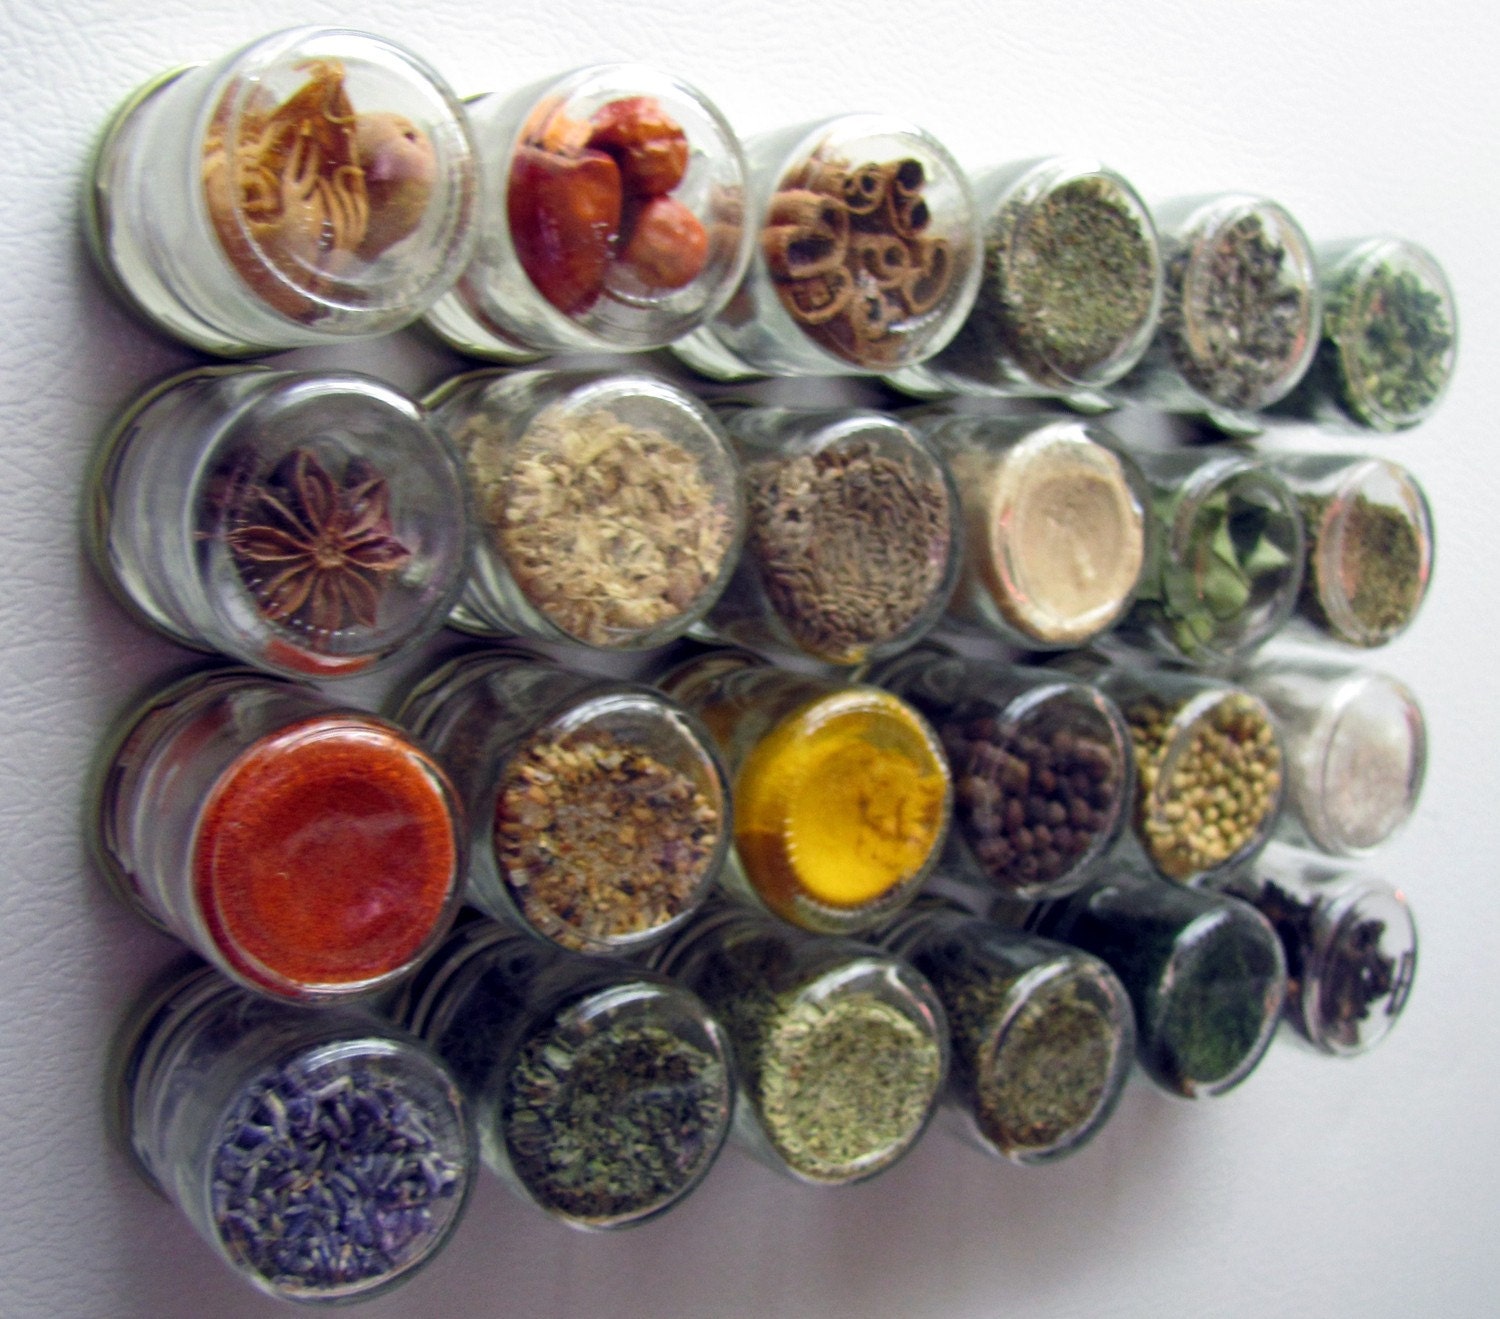 magnetic spice jars